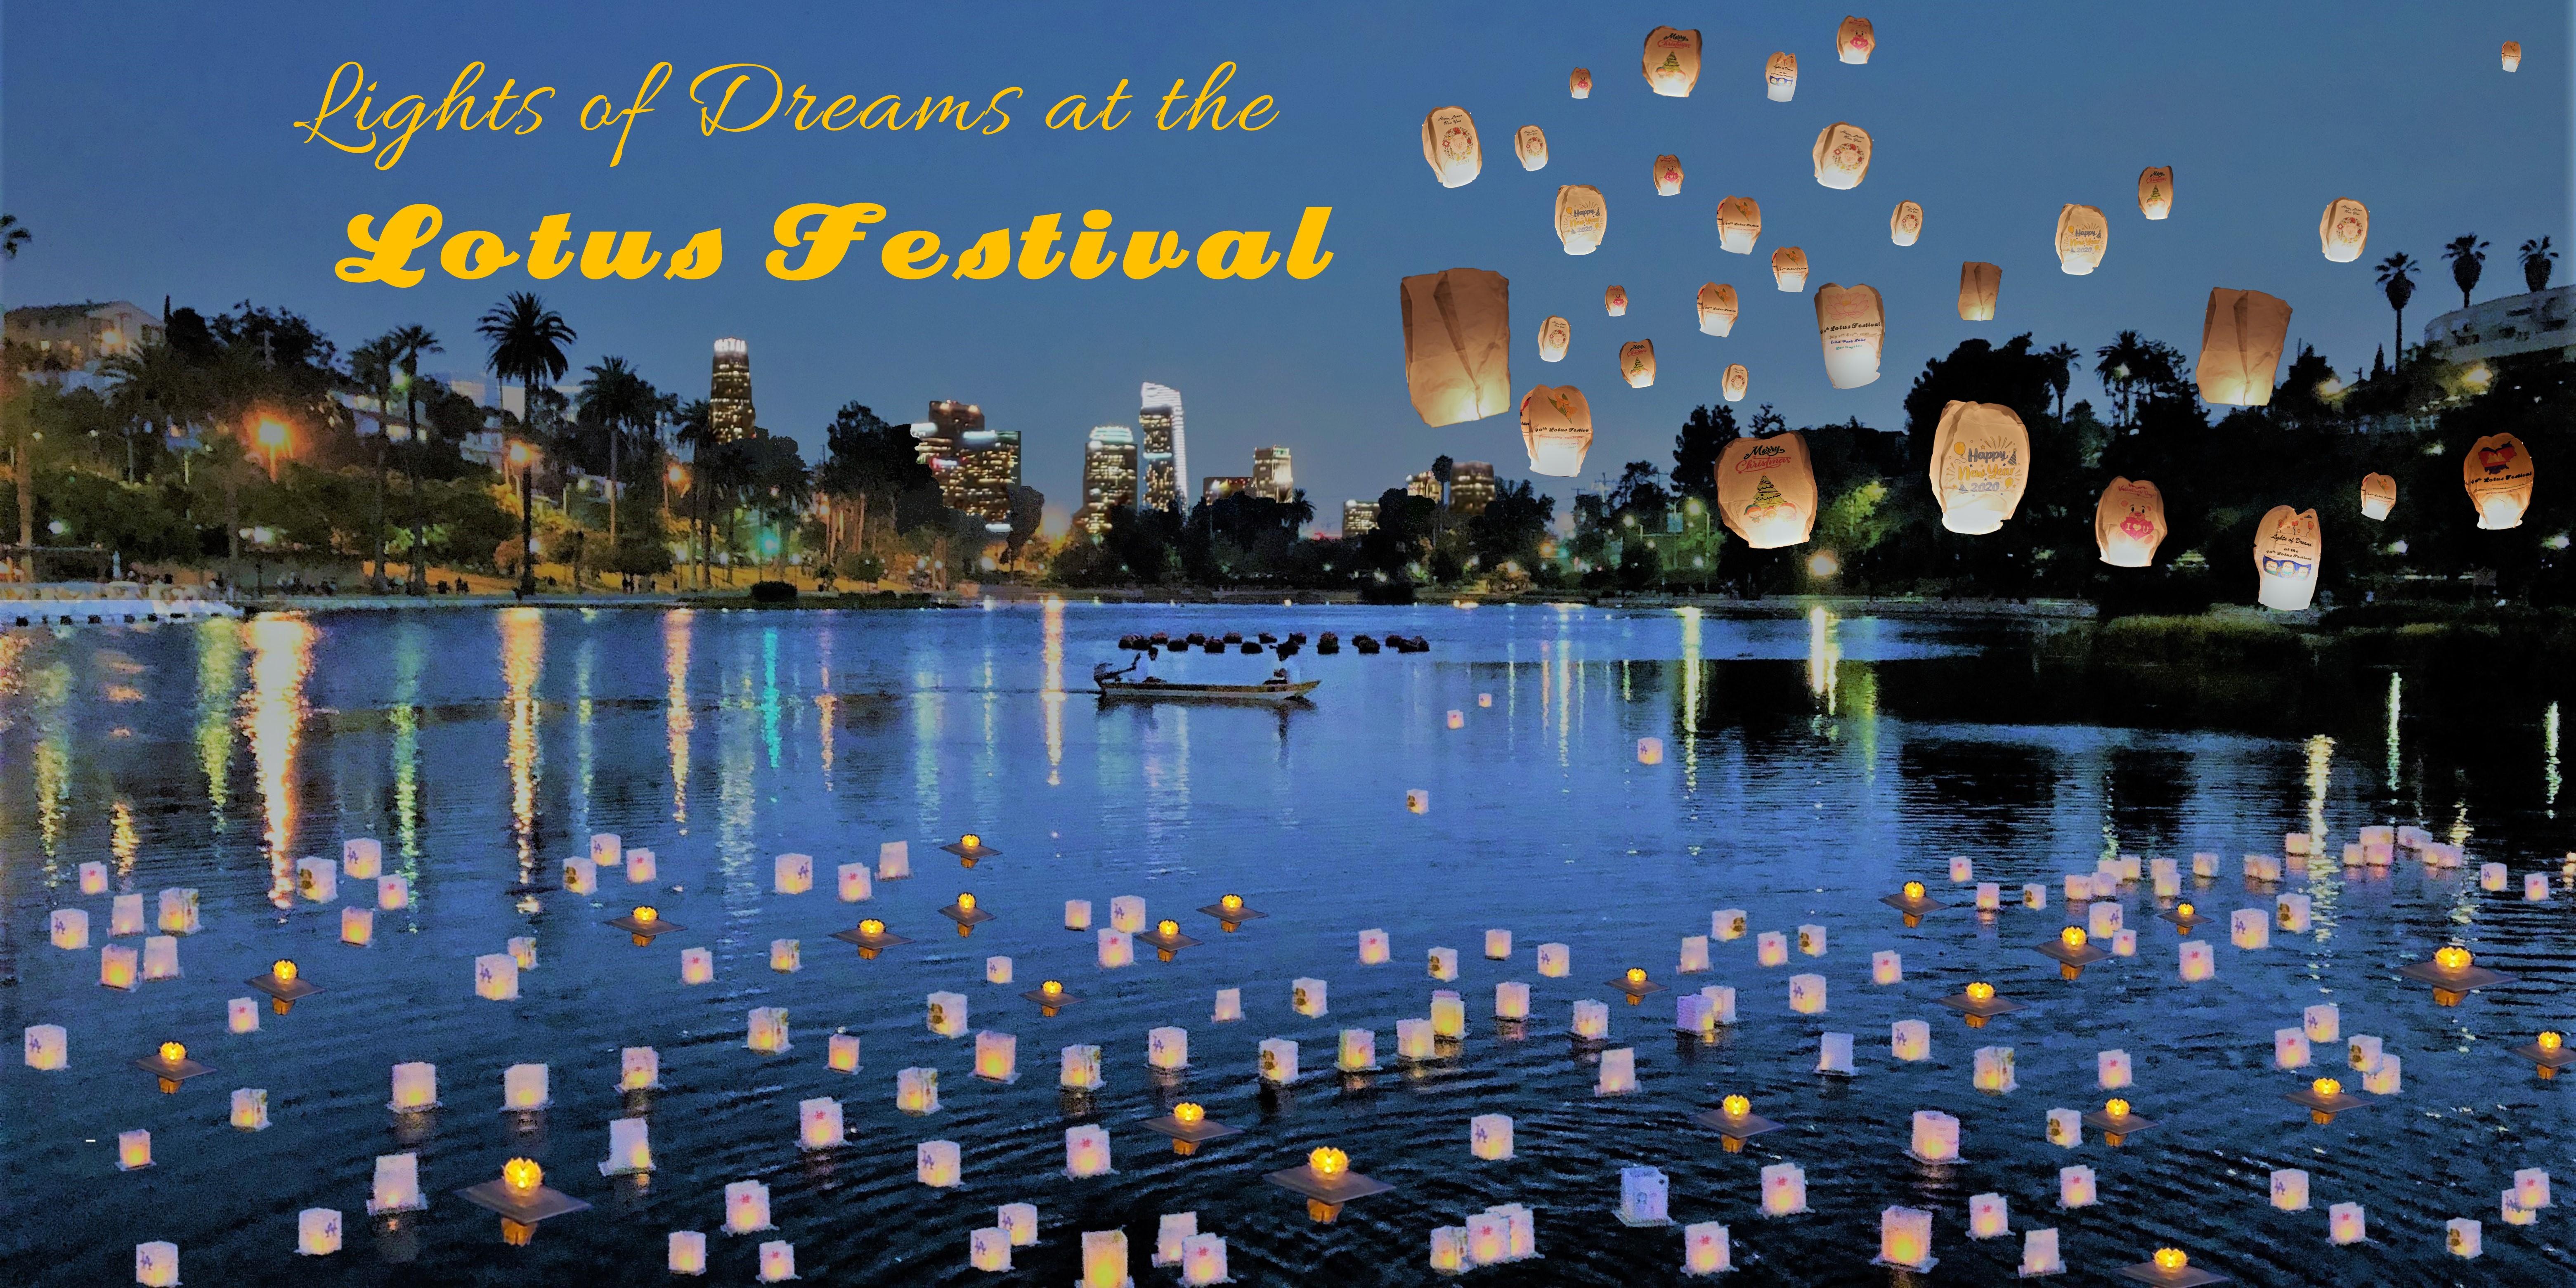 Lights of Dreams Lantern Event at LA Lotus Festival